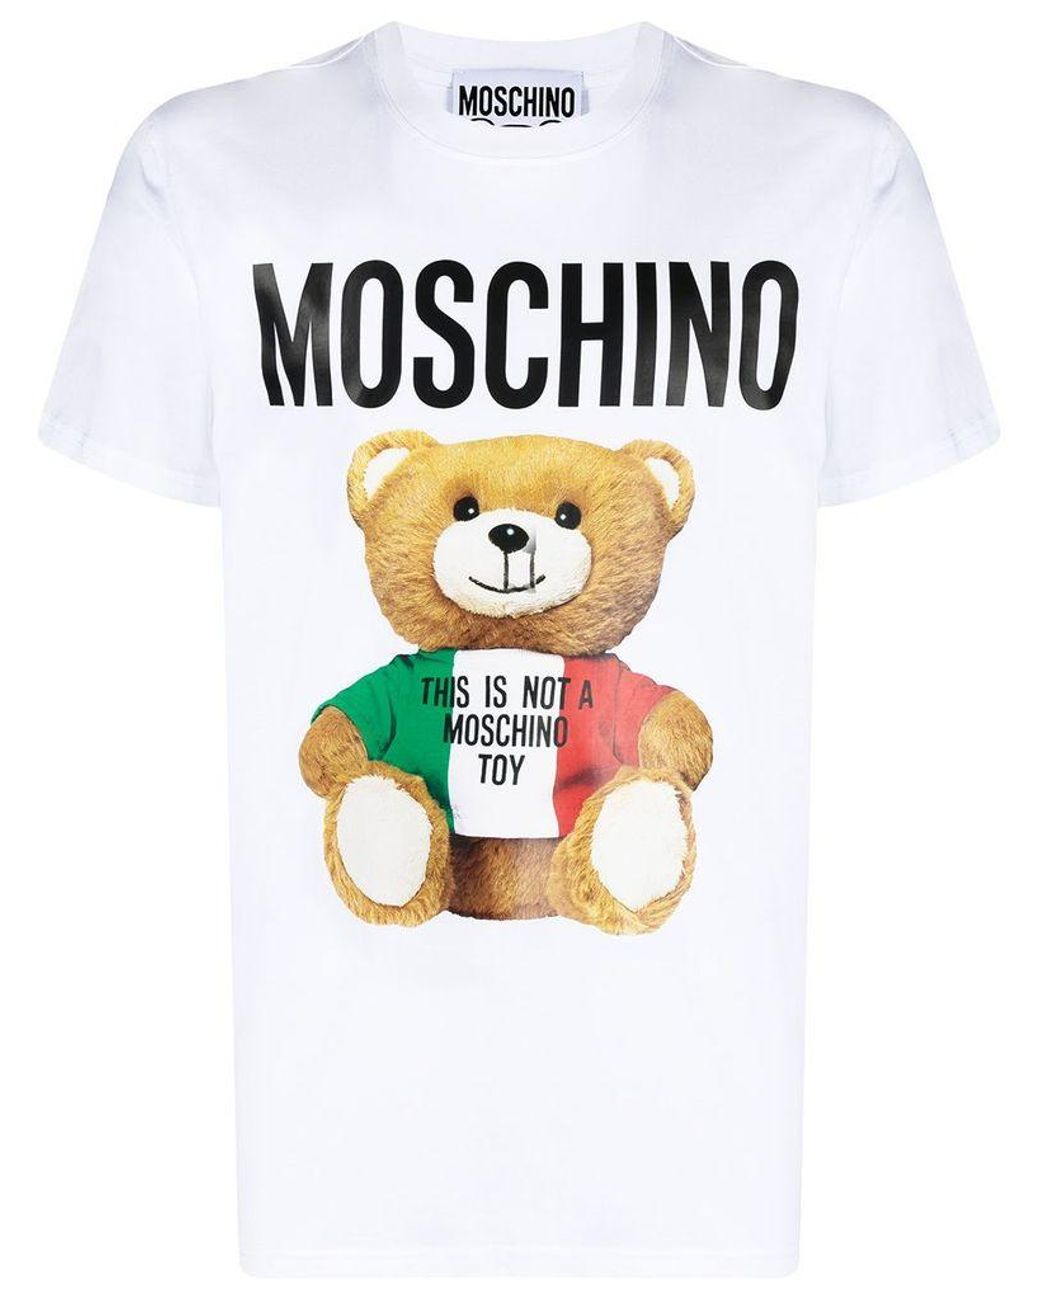 Moschino Men's V072020401001 White Cotton T-shirt for Men - Lyst